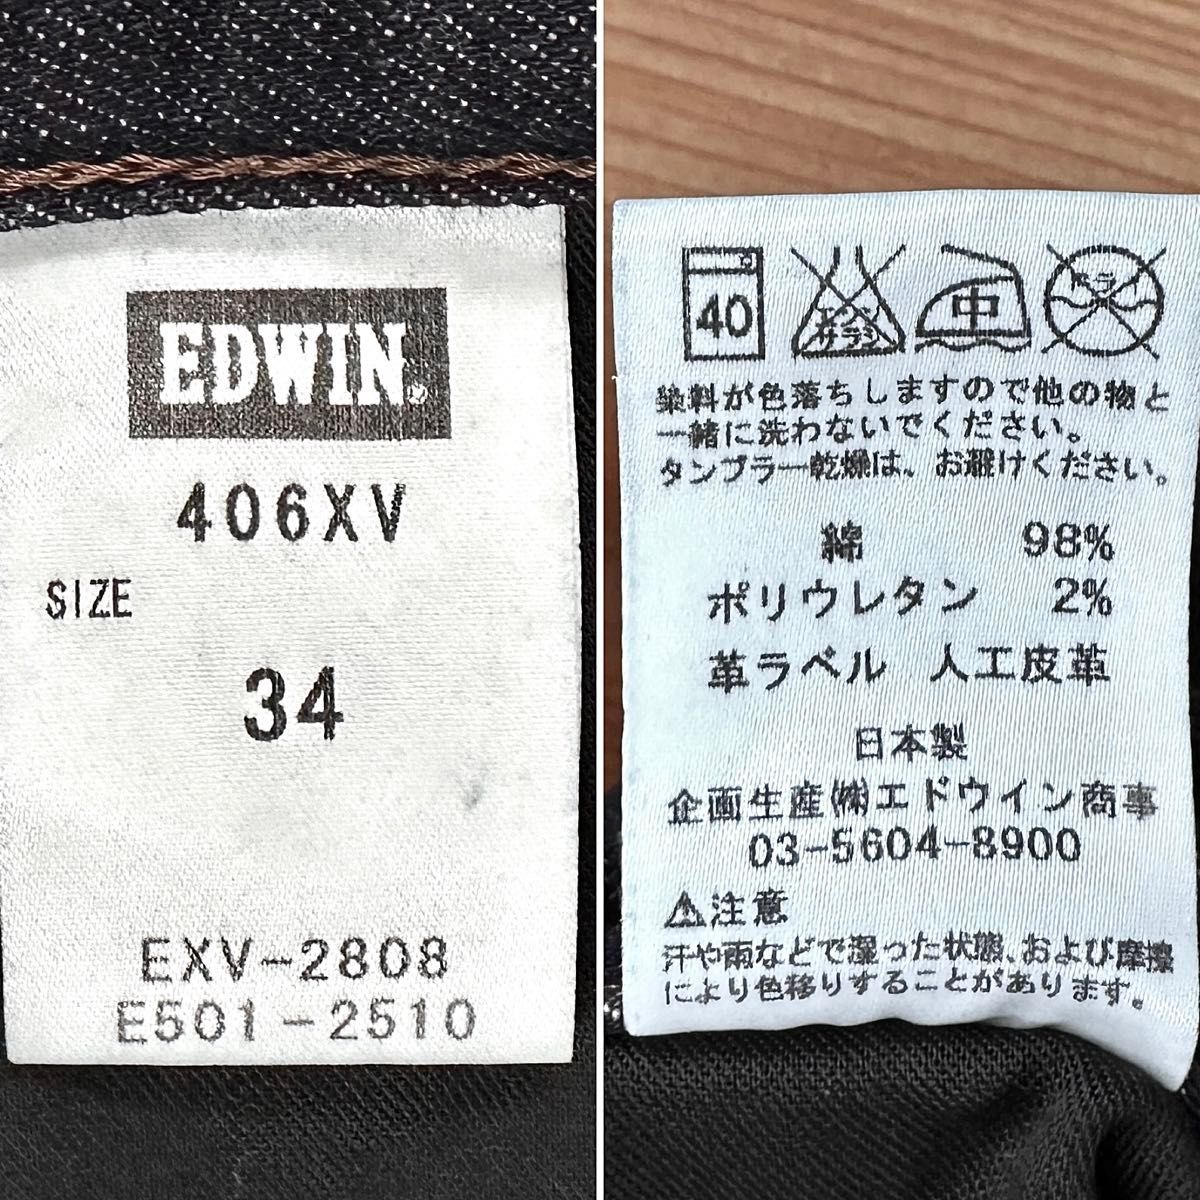 EDWIN 406XV エドウィン ストレッチデニムパンツ テーパード 濃紺